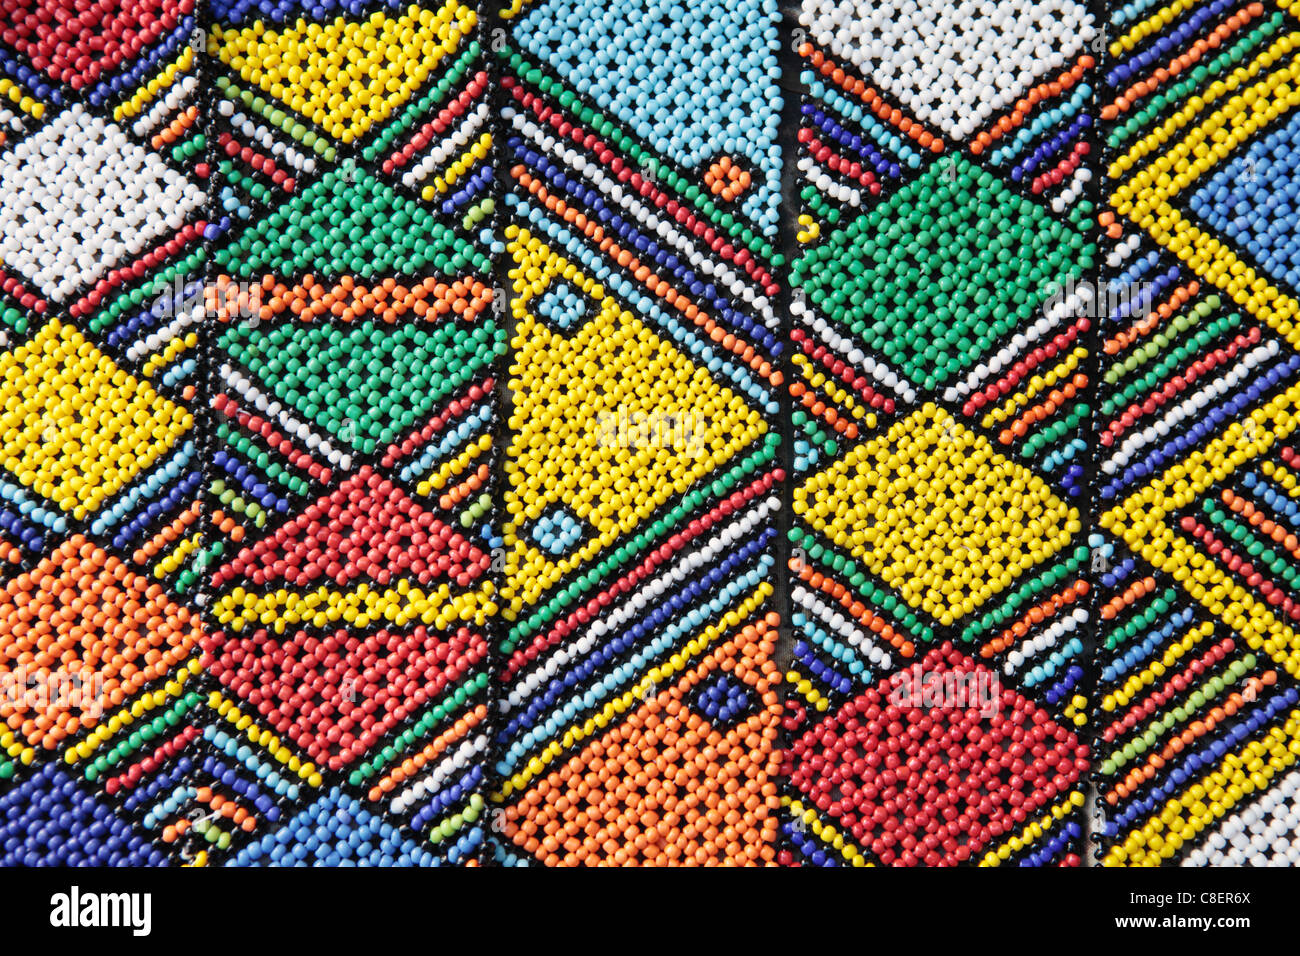 African Art pattern